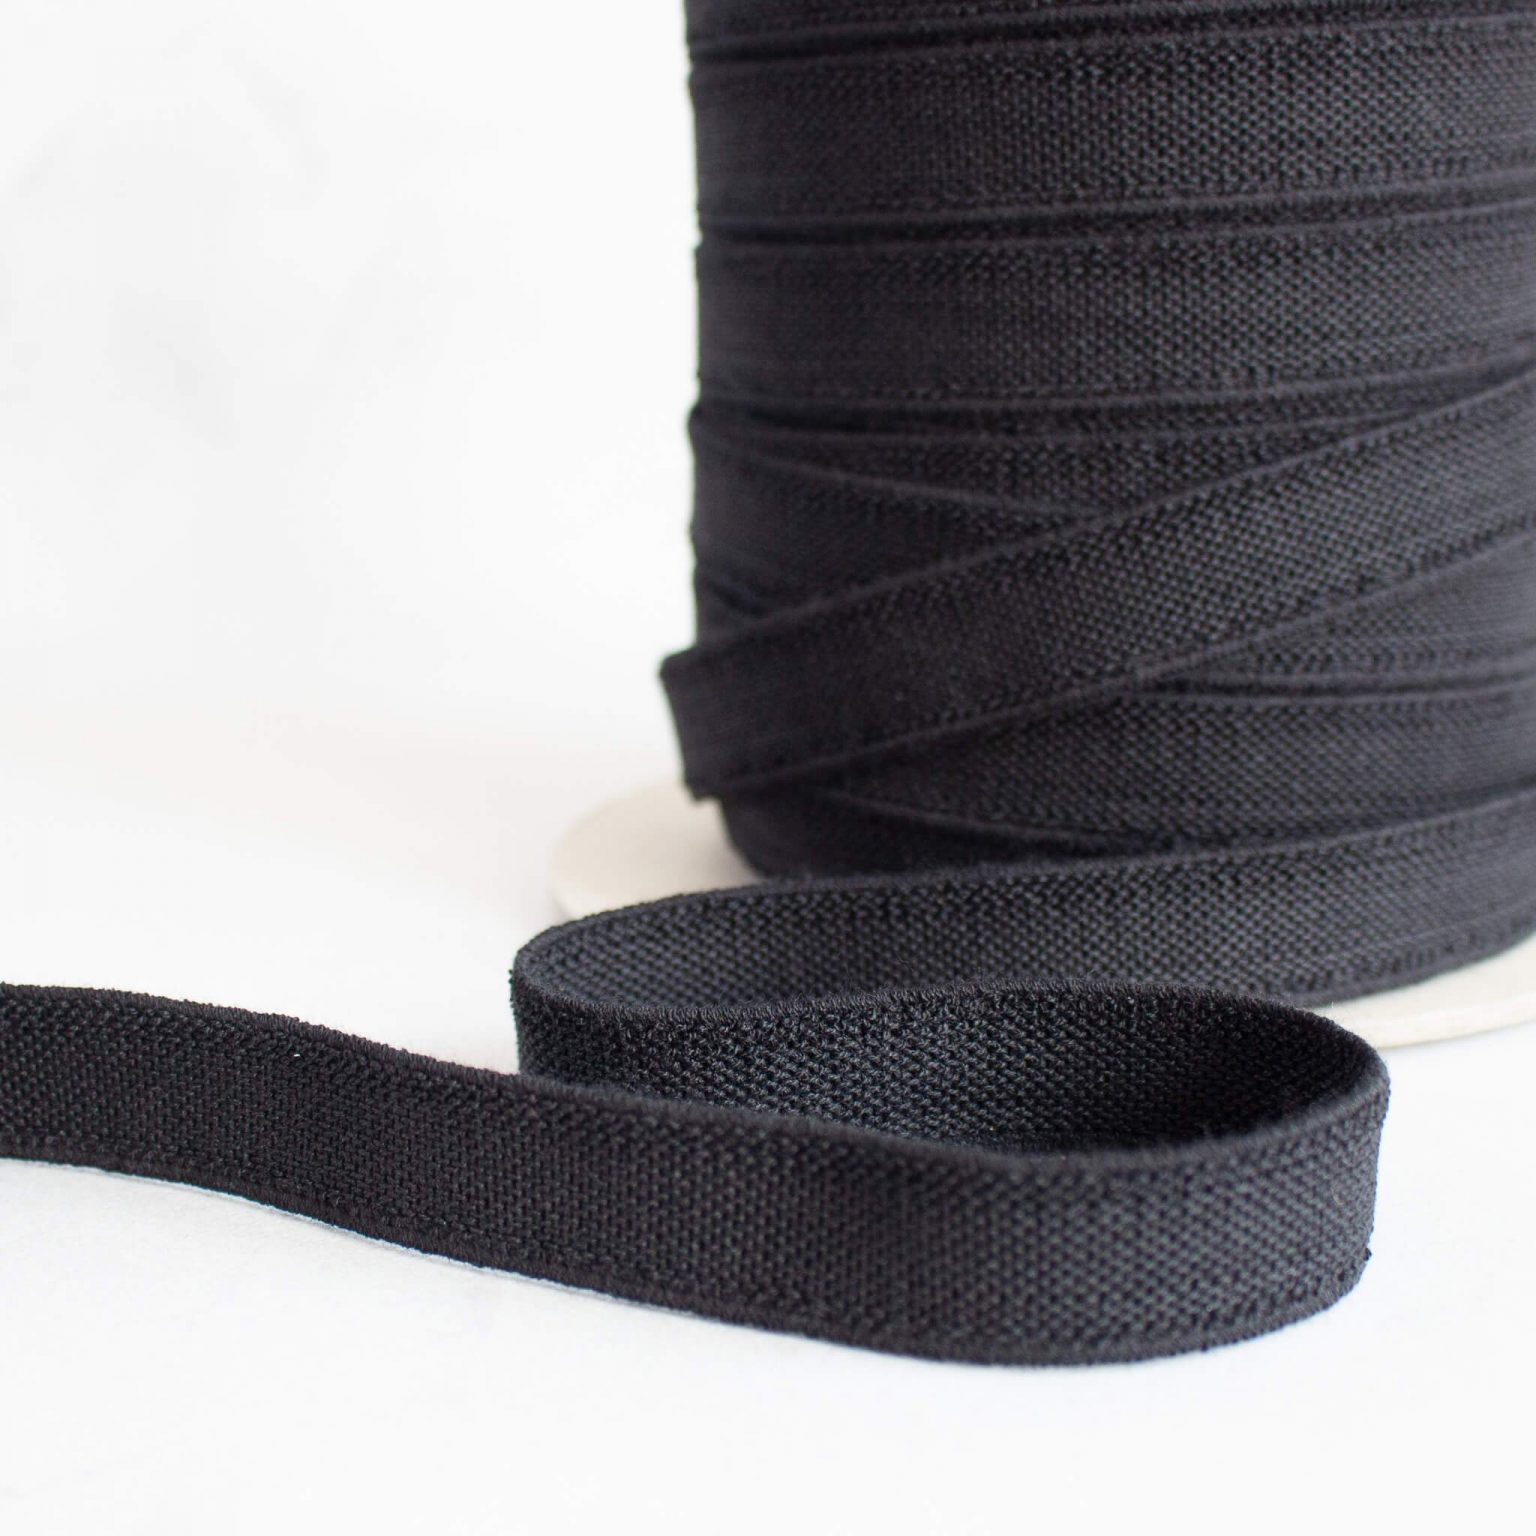 Black elastic on a roll slightly unrolled